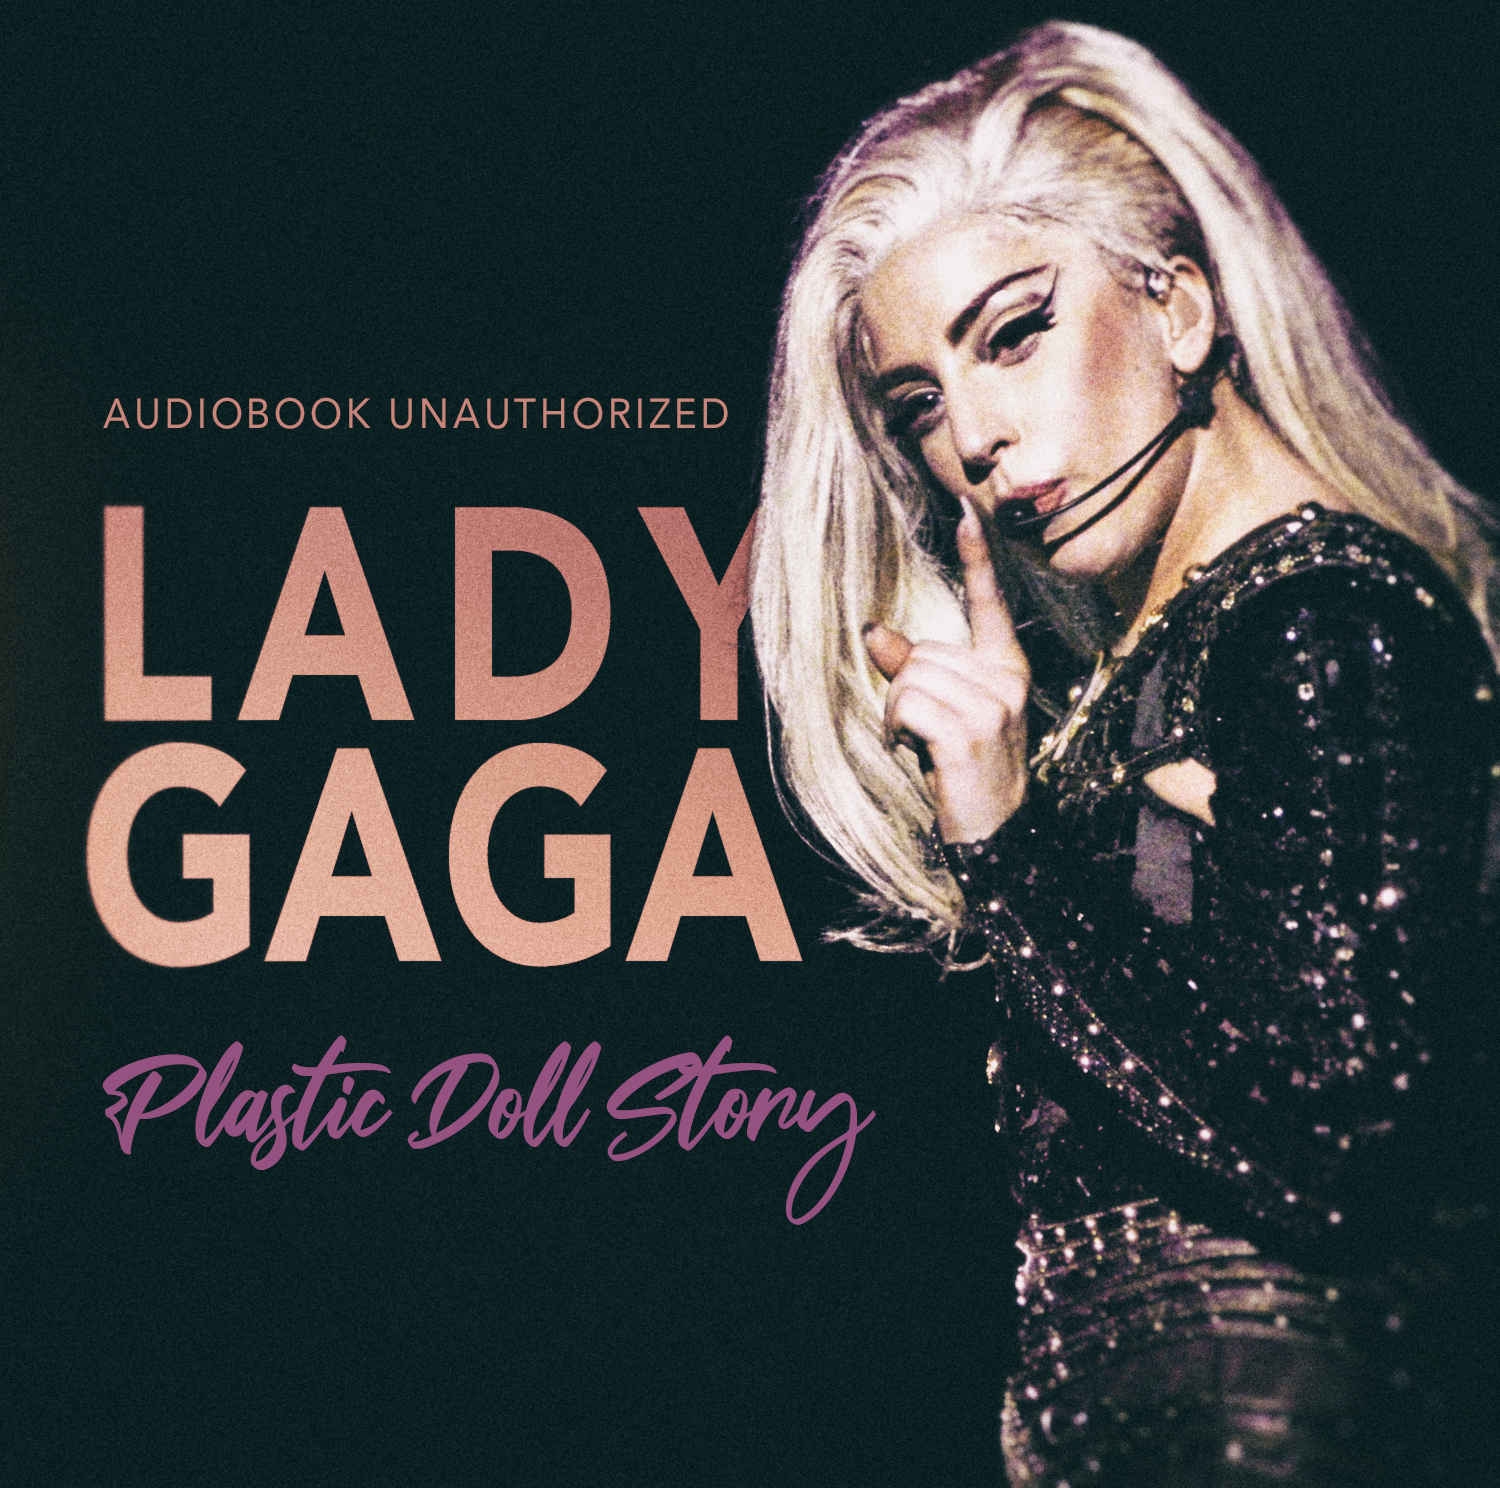 Lady Gaga Plastic Doll Story Audiobook Unauthorized Mvd Entertainment Group B2b